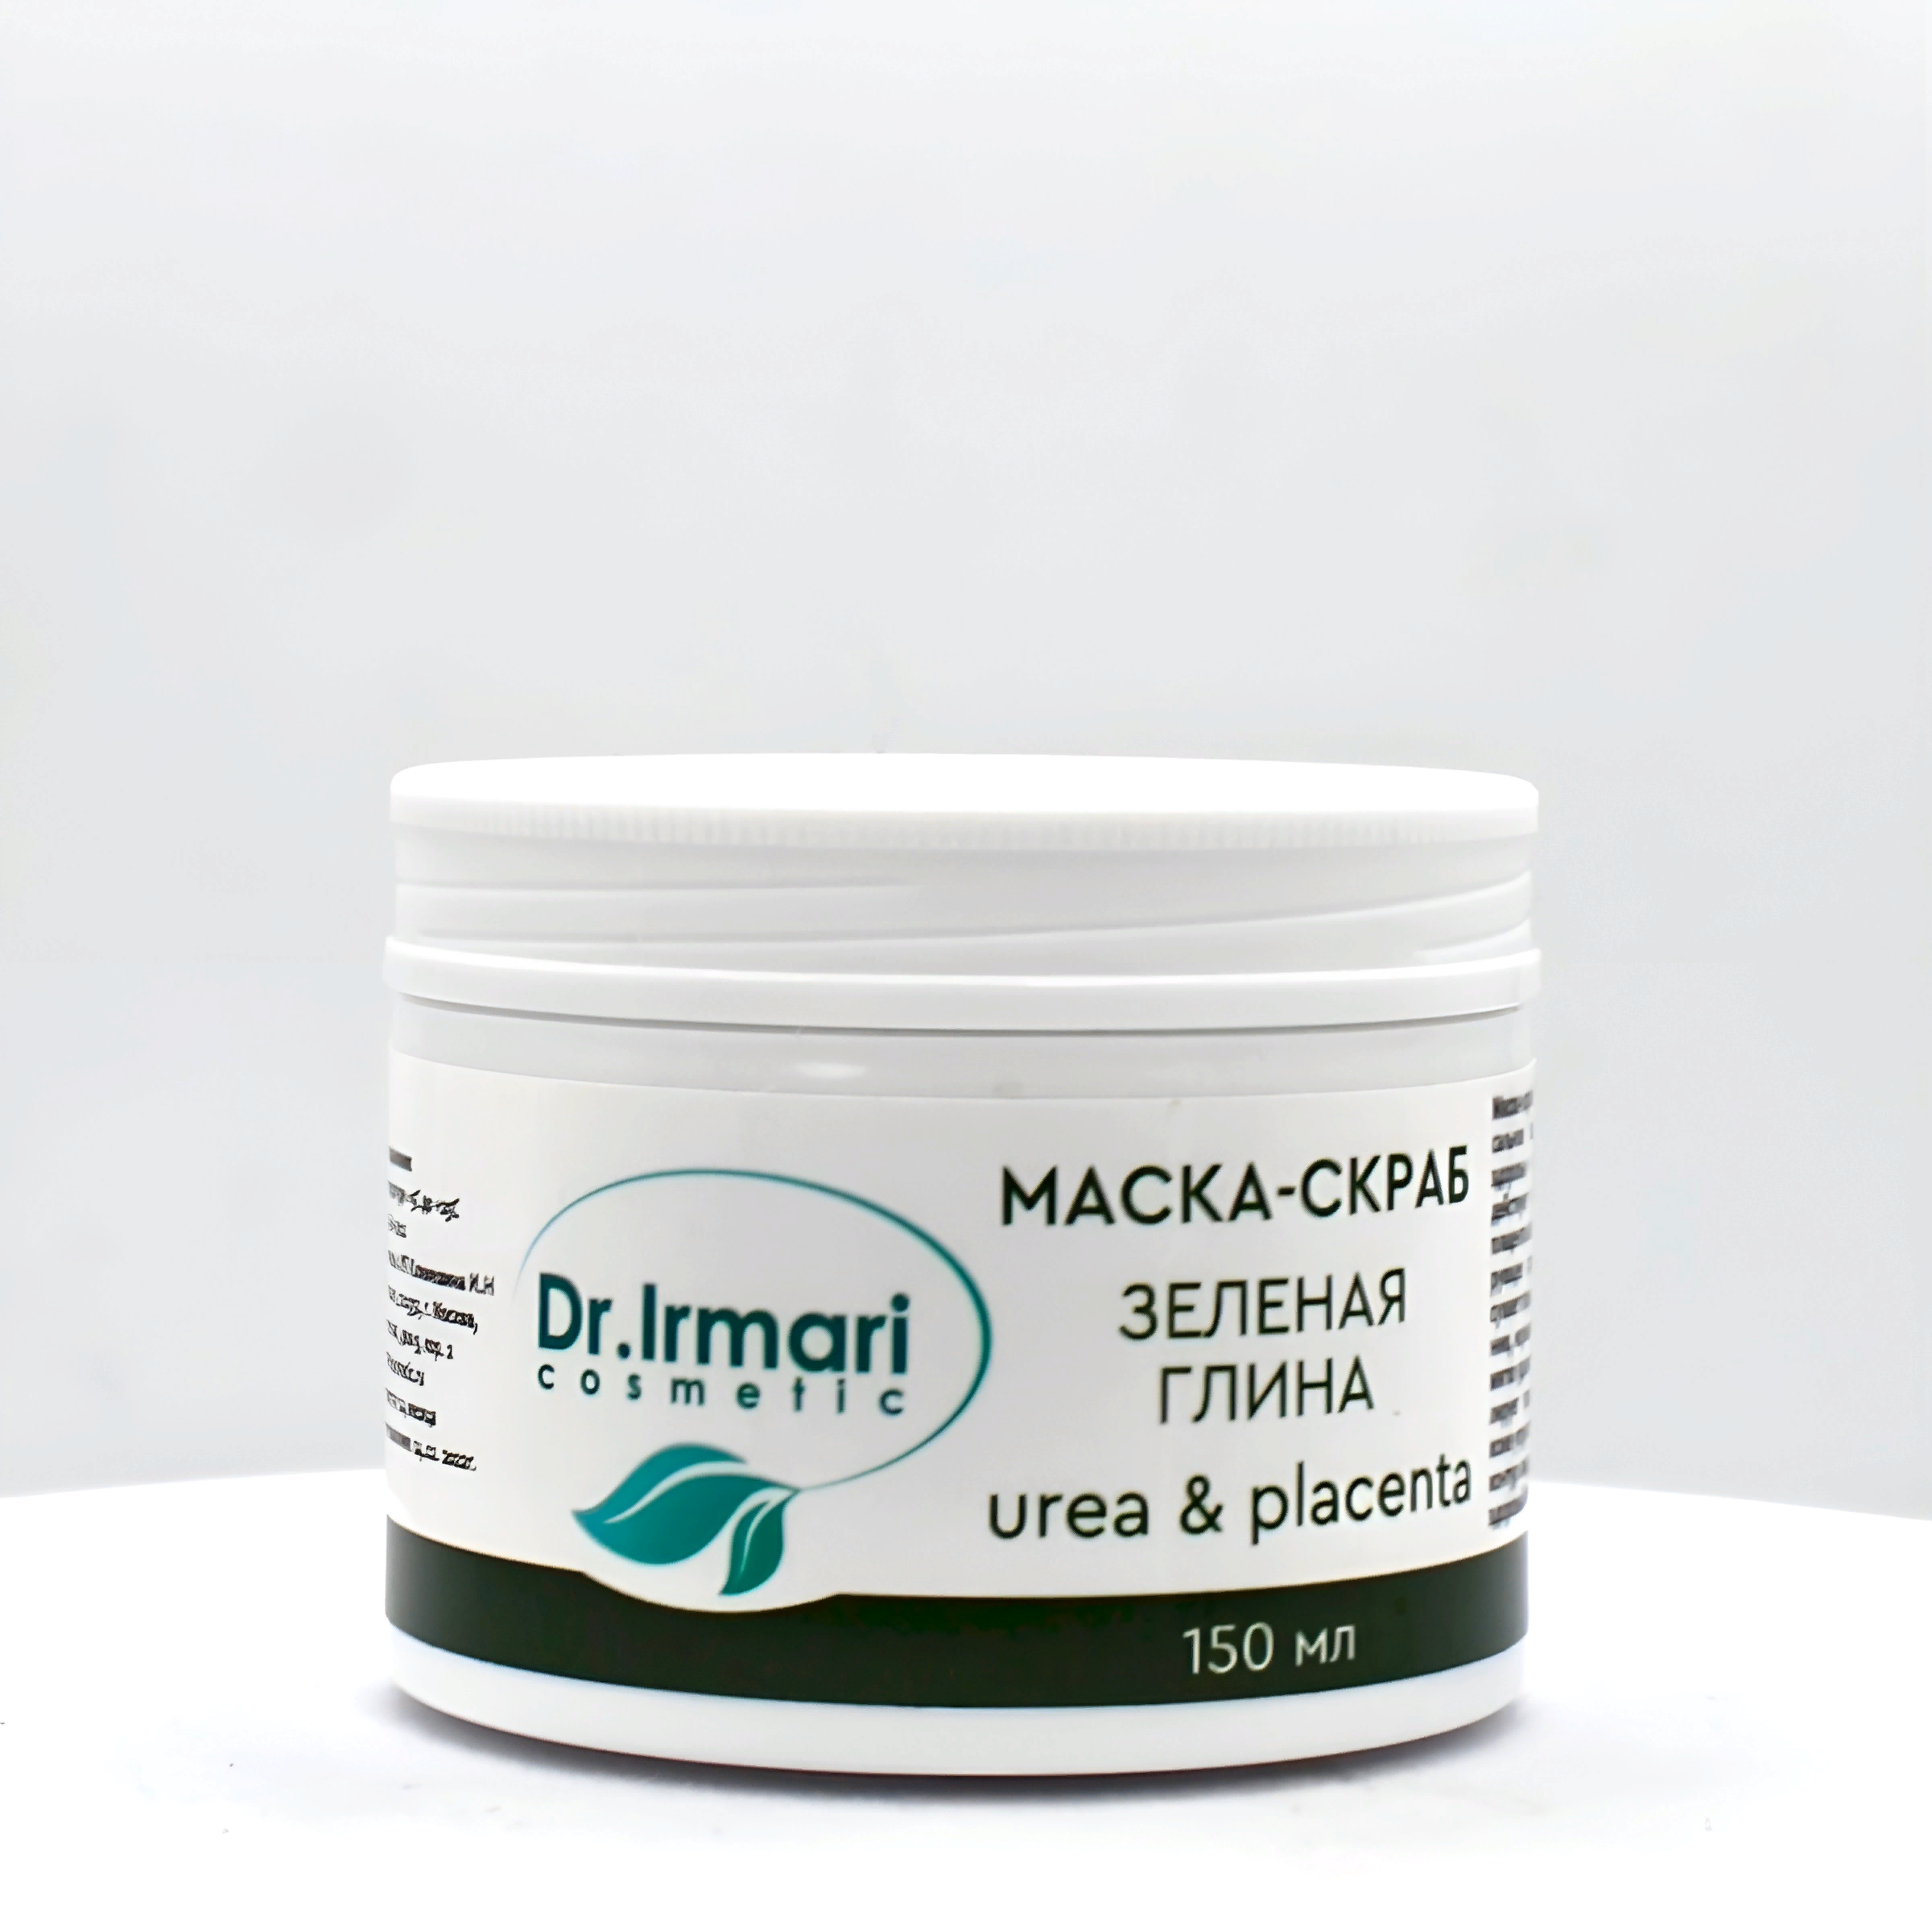 Маска-скраб Dr.Irmari cosmetic Urea & Placenta Зелёная глина 150 мл yellow clay mask маска из желтой глины